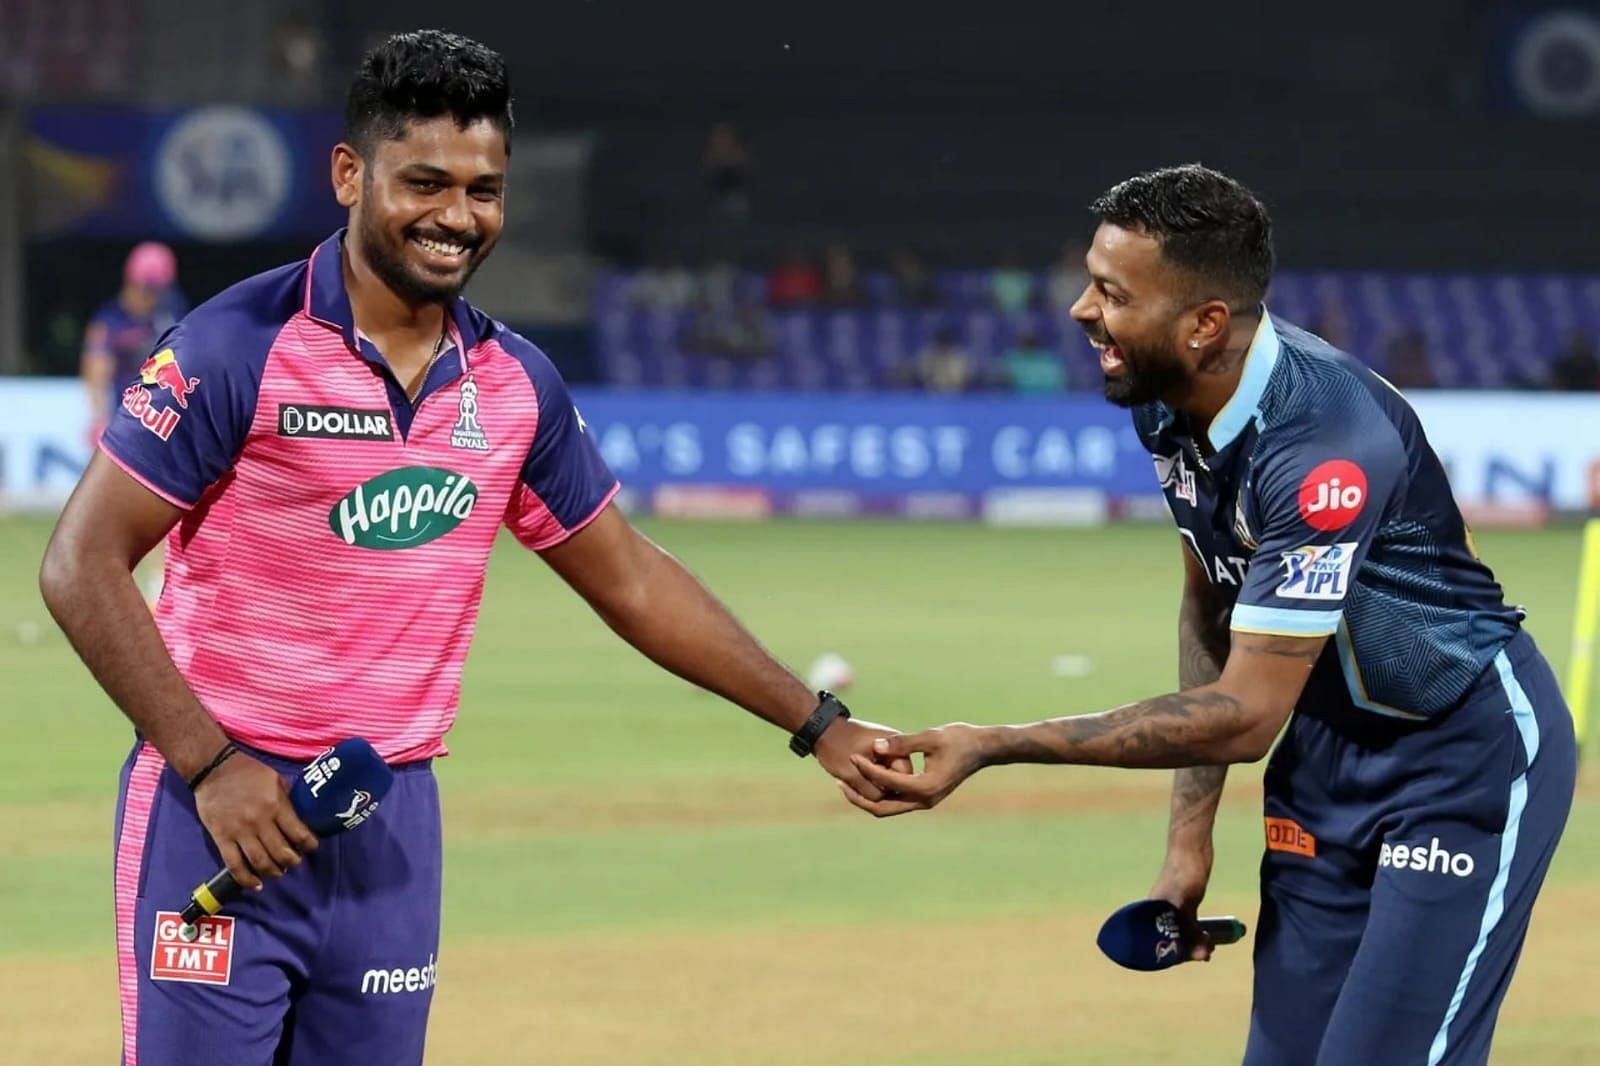 Sanju Samson and Hardik Pandya led their teams to the final of the IPL 2022.